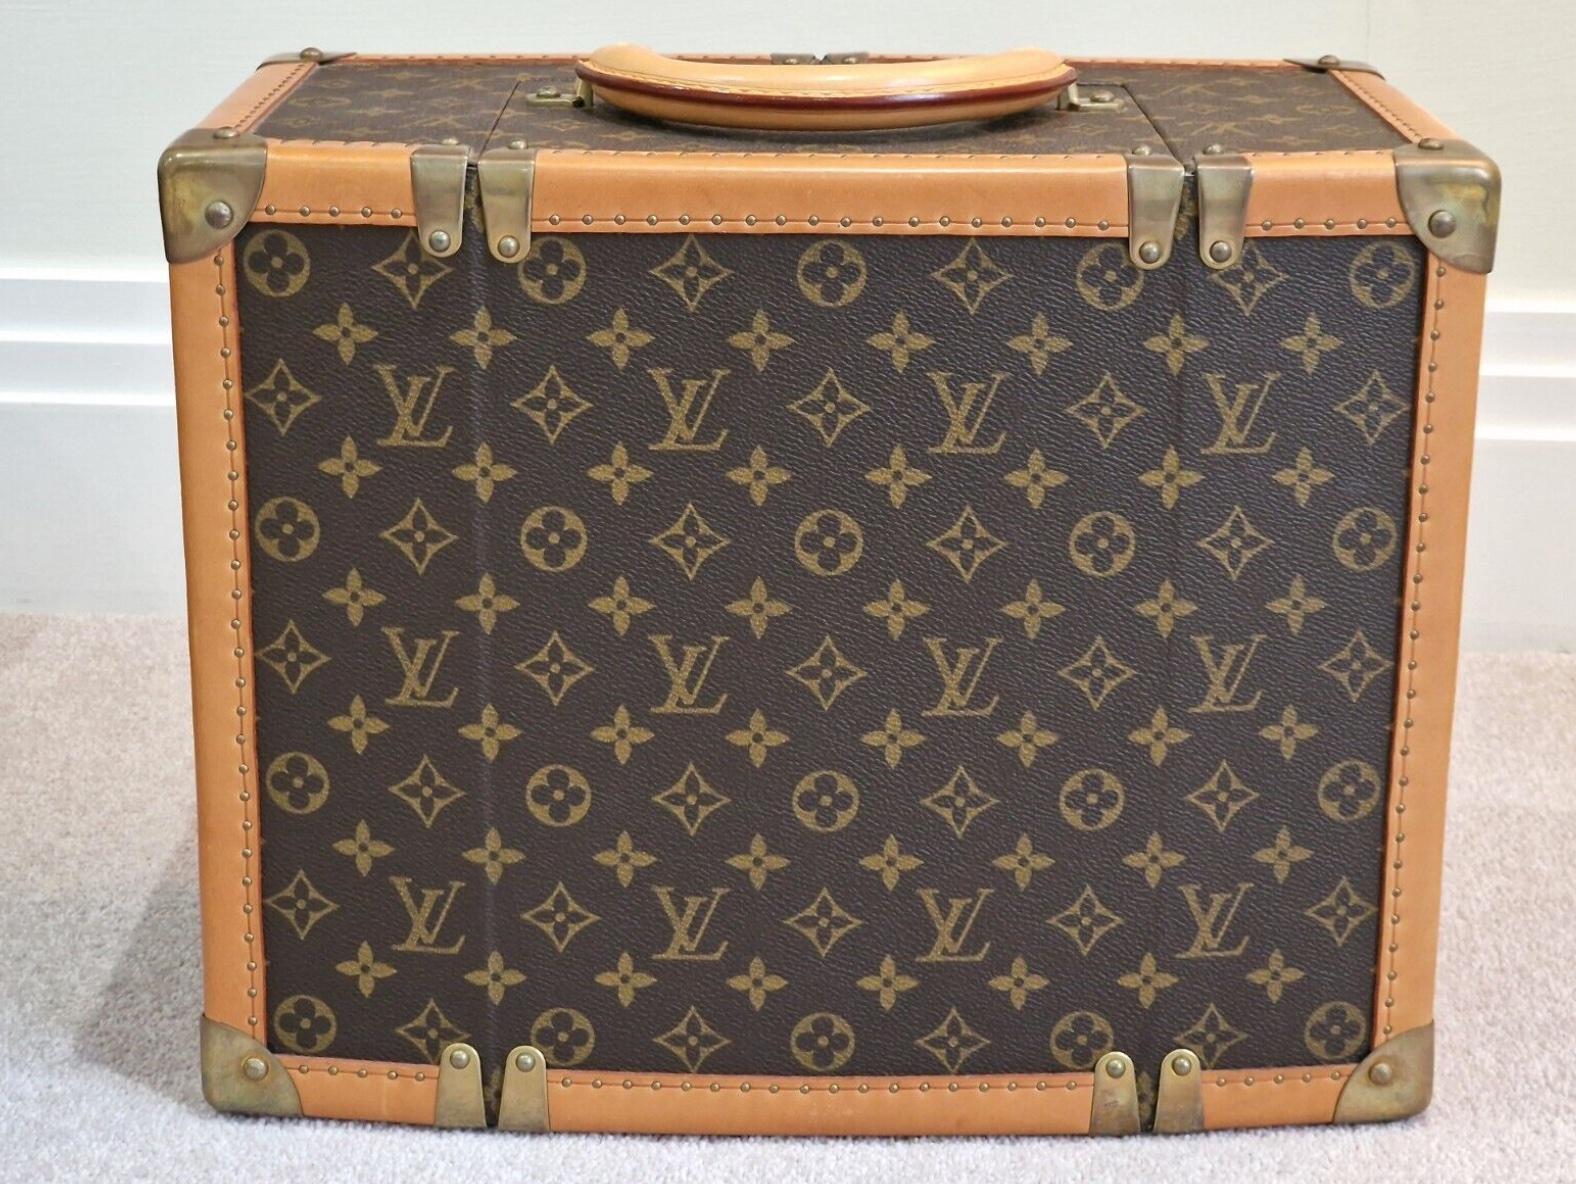 Louis Vuitton Trunk Sharon Stone Case amfAR One Of 